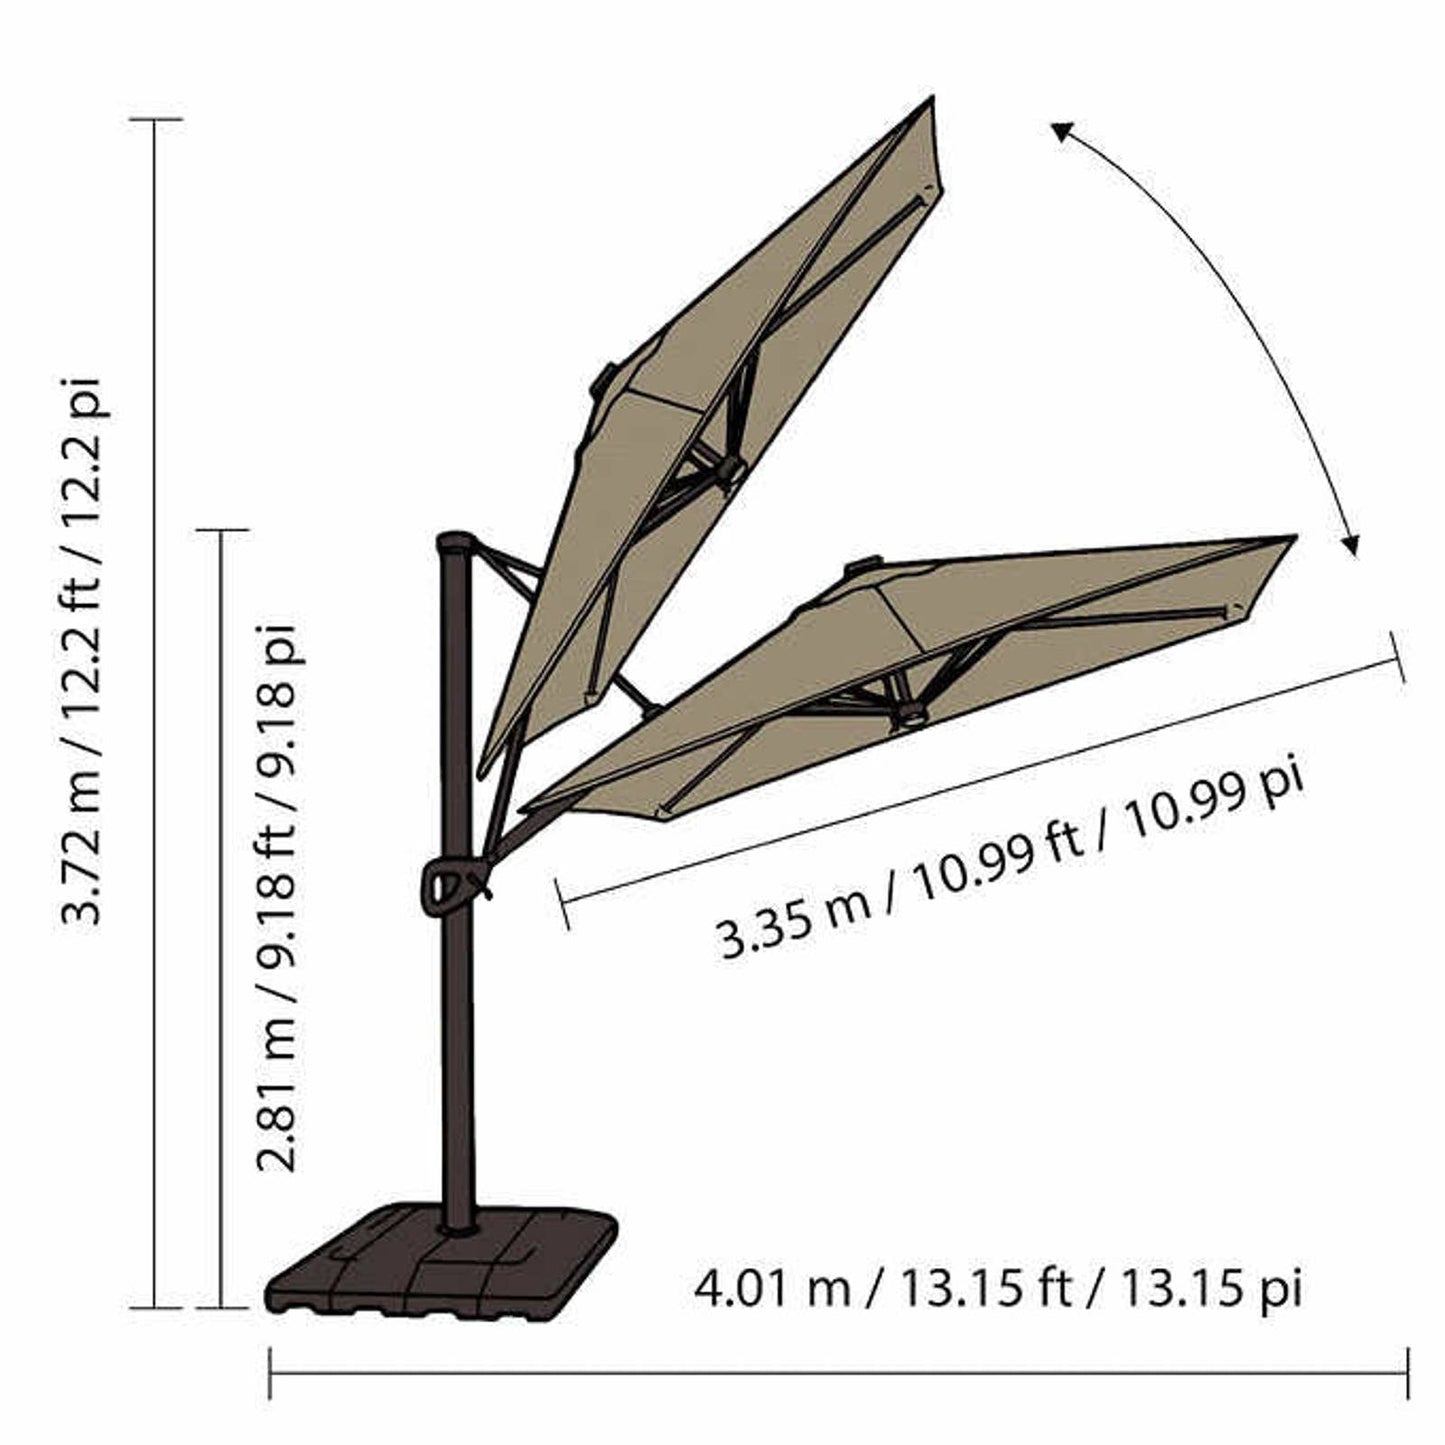 Like NEW - Costco - Seasons Sentry GREY 10' Square Solar LED Cantilever Umbrella -Retail $699